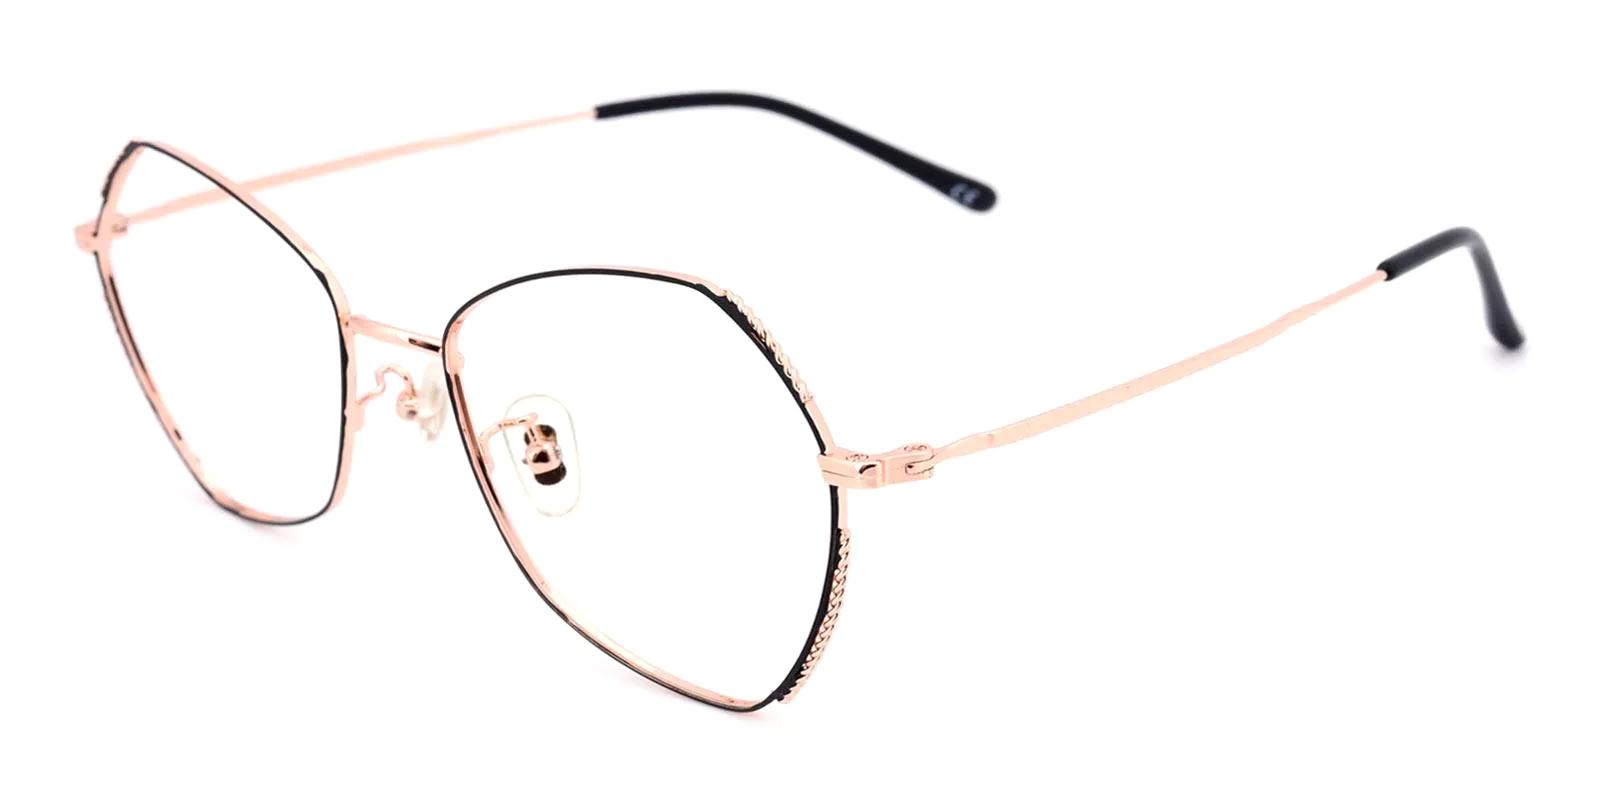 Dontic Gold Metal Eyeglasses , NosePads Frames from ABBE Glasses